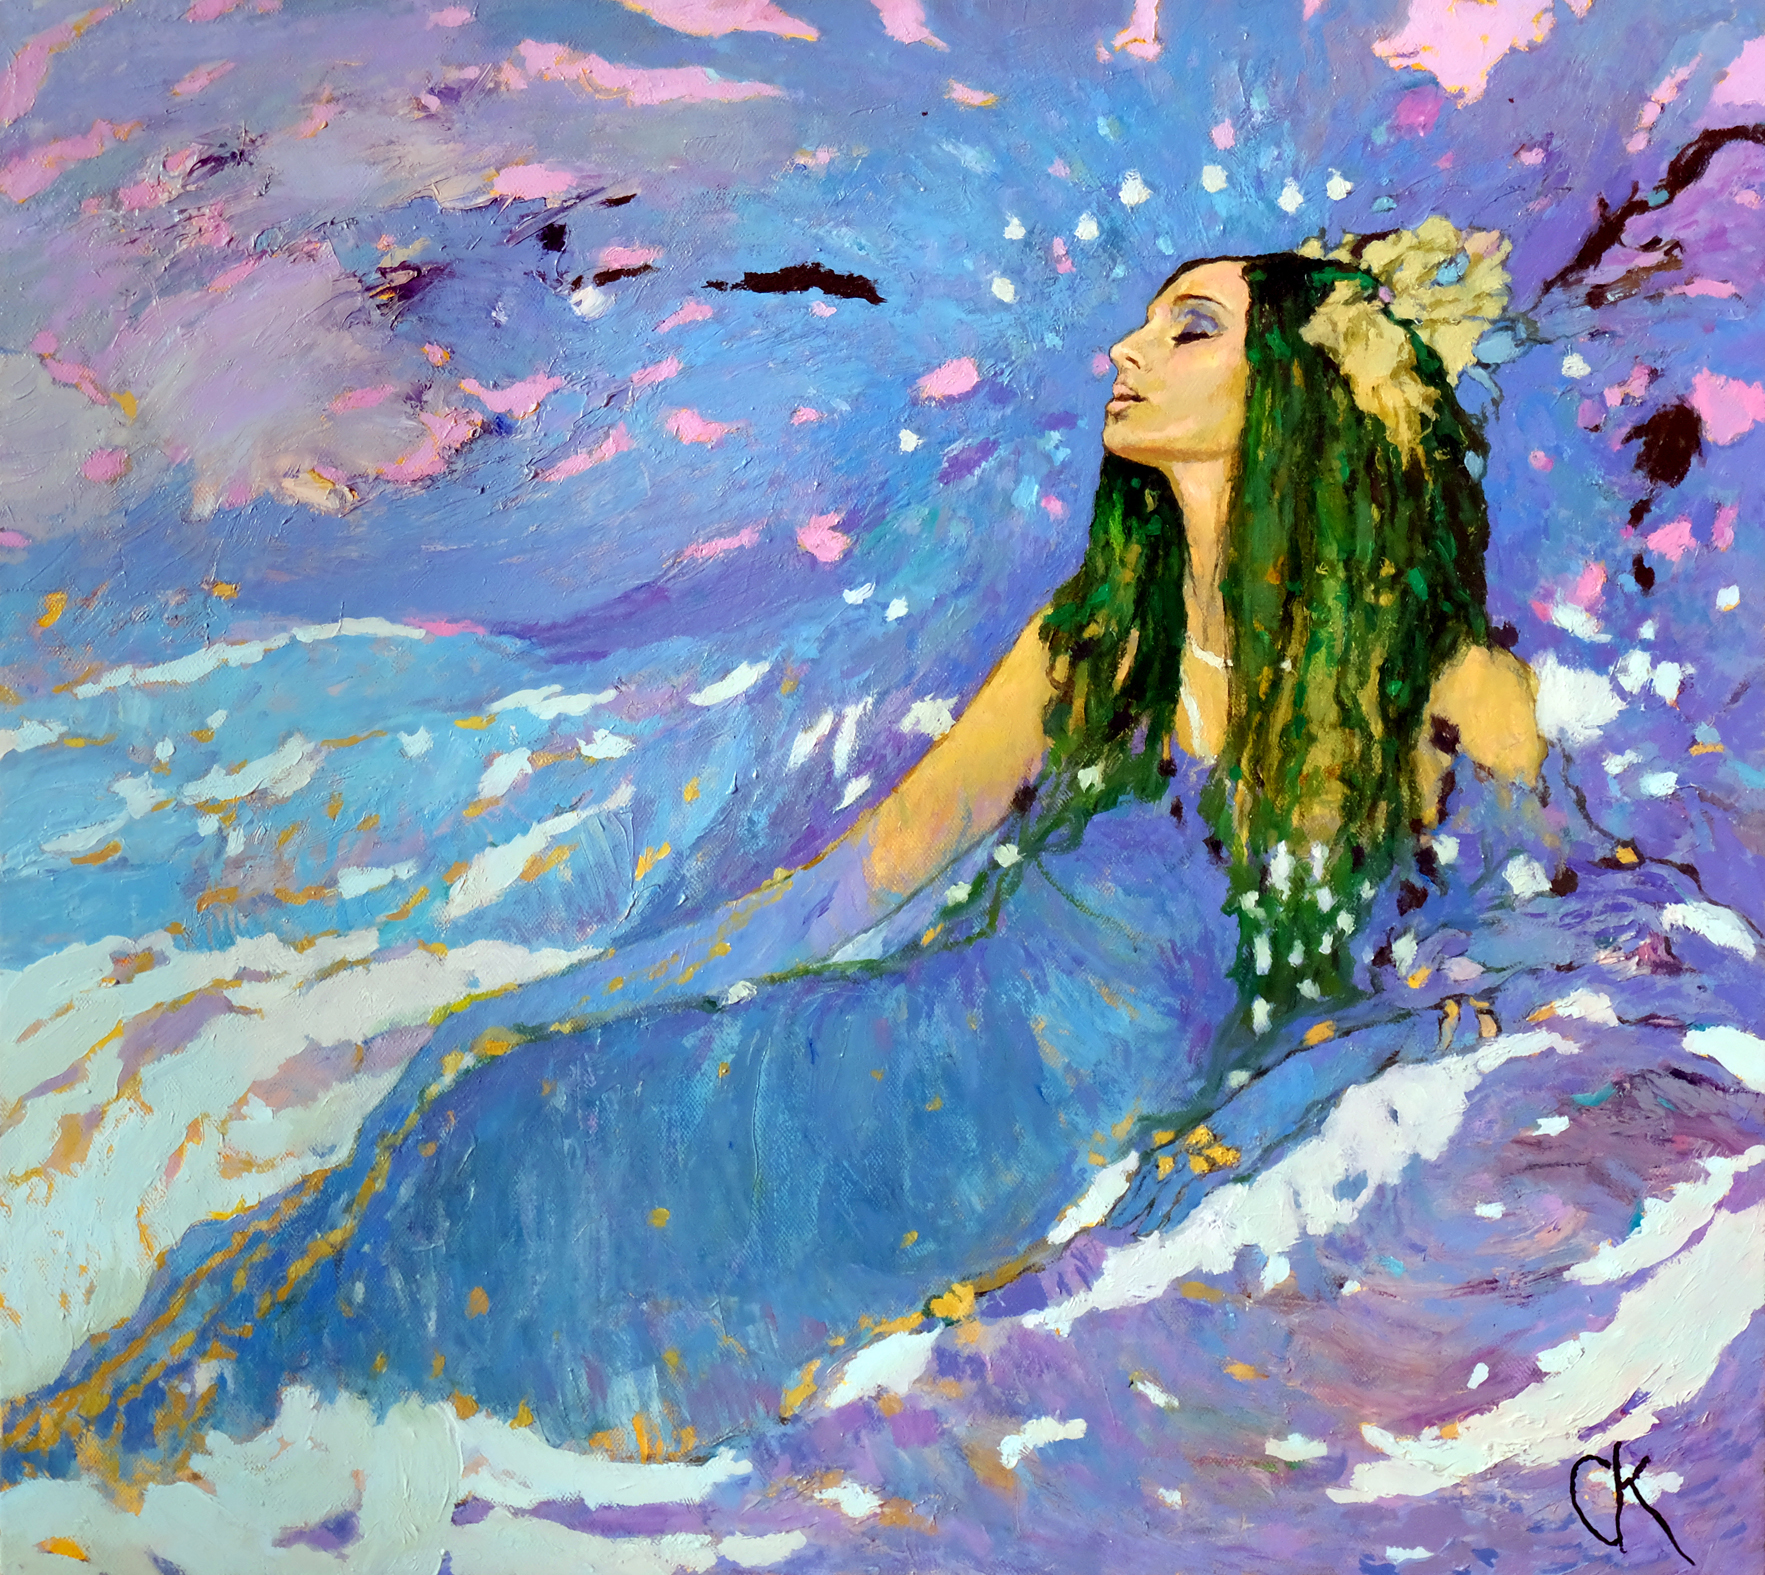 The Sea Princess - 1, Stanislav Krupp, Buy the painting Oil